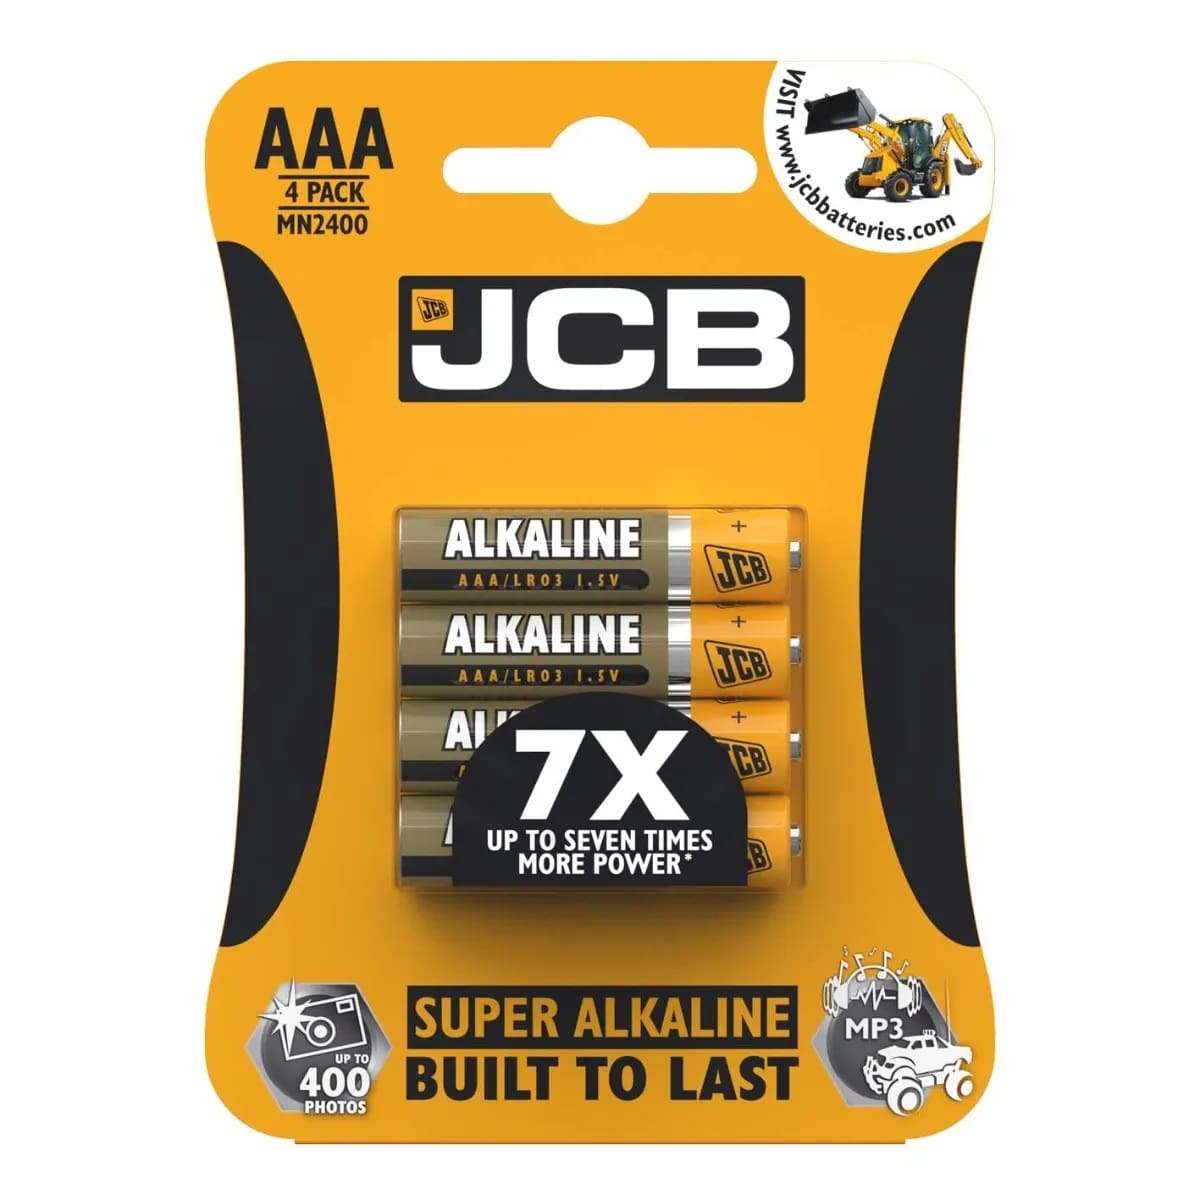 JCB AAA Super Alkaline, Pack of 4 Batteries Mn2400